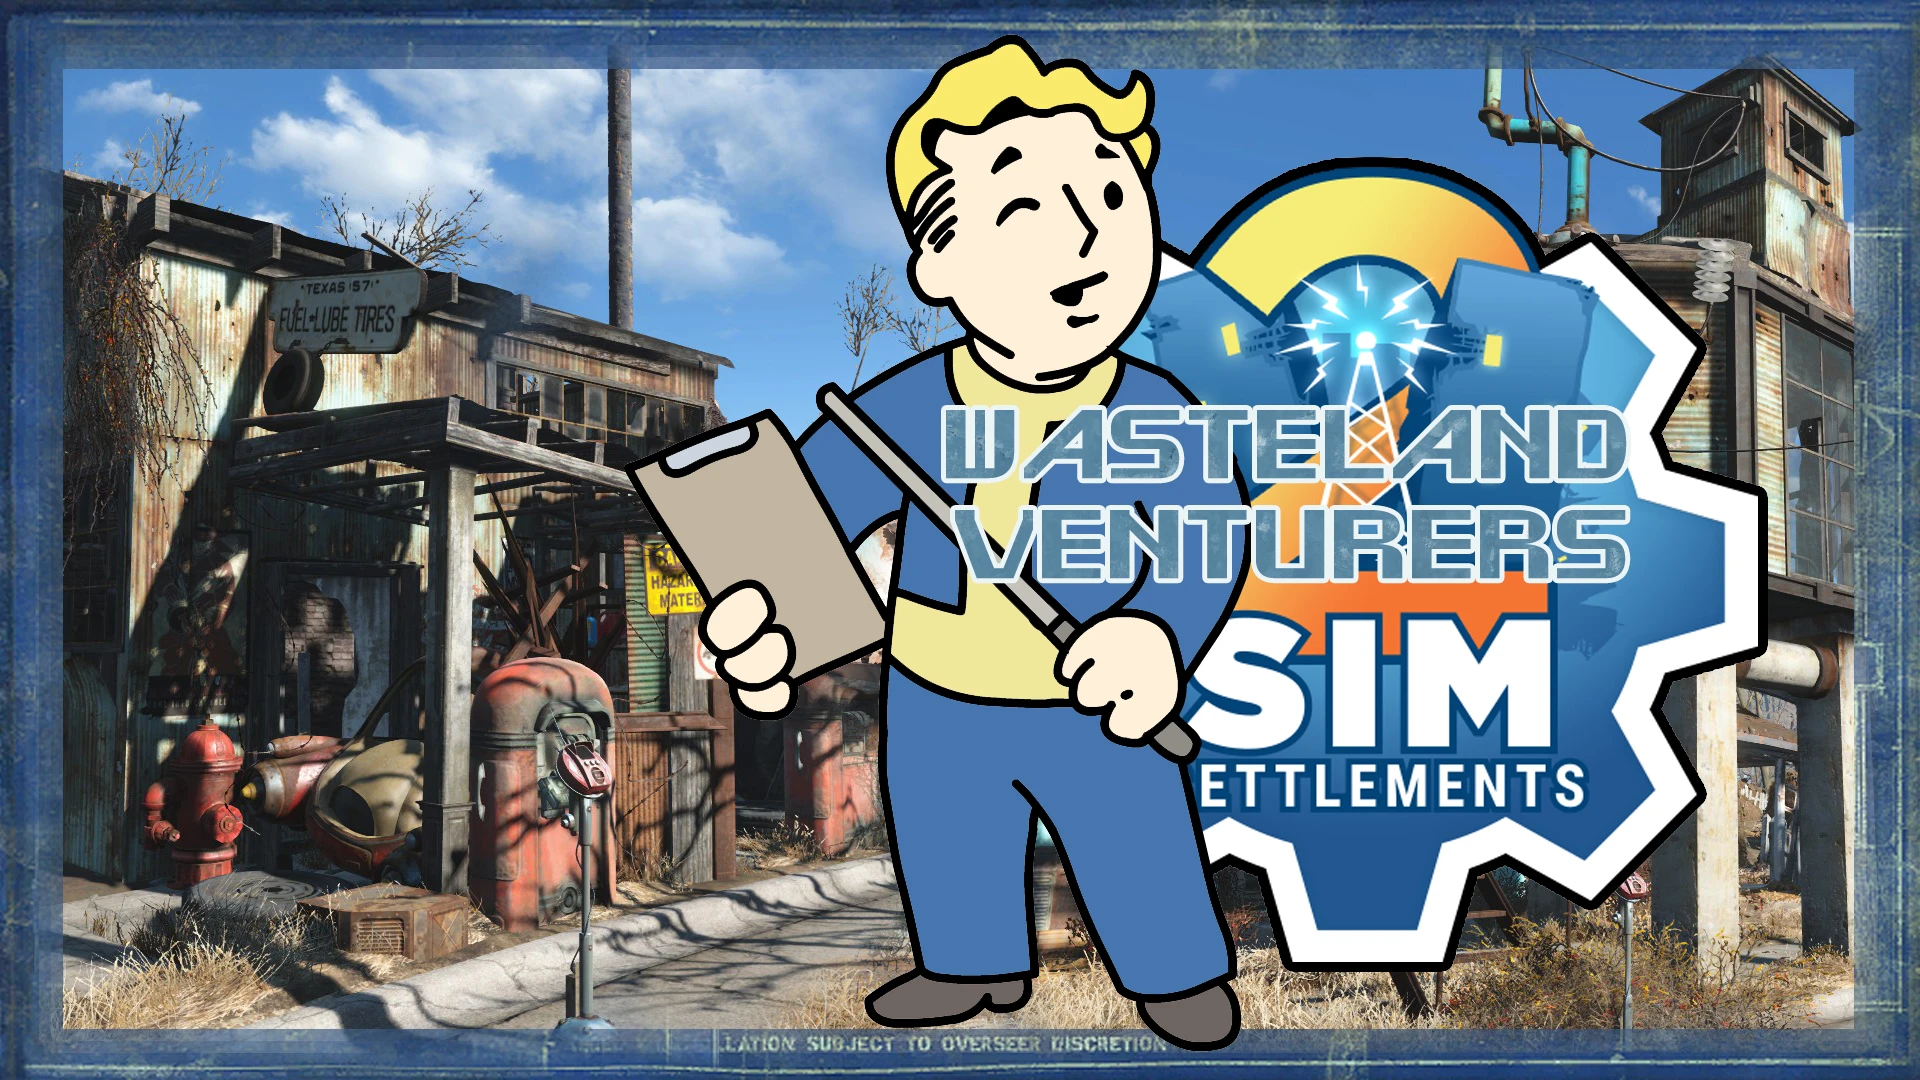 Fallout 4 wasteland venturers sim settlements 2 addon pack (120) фото